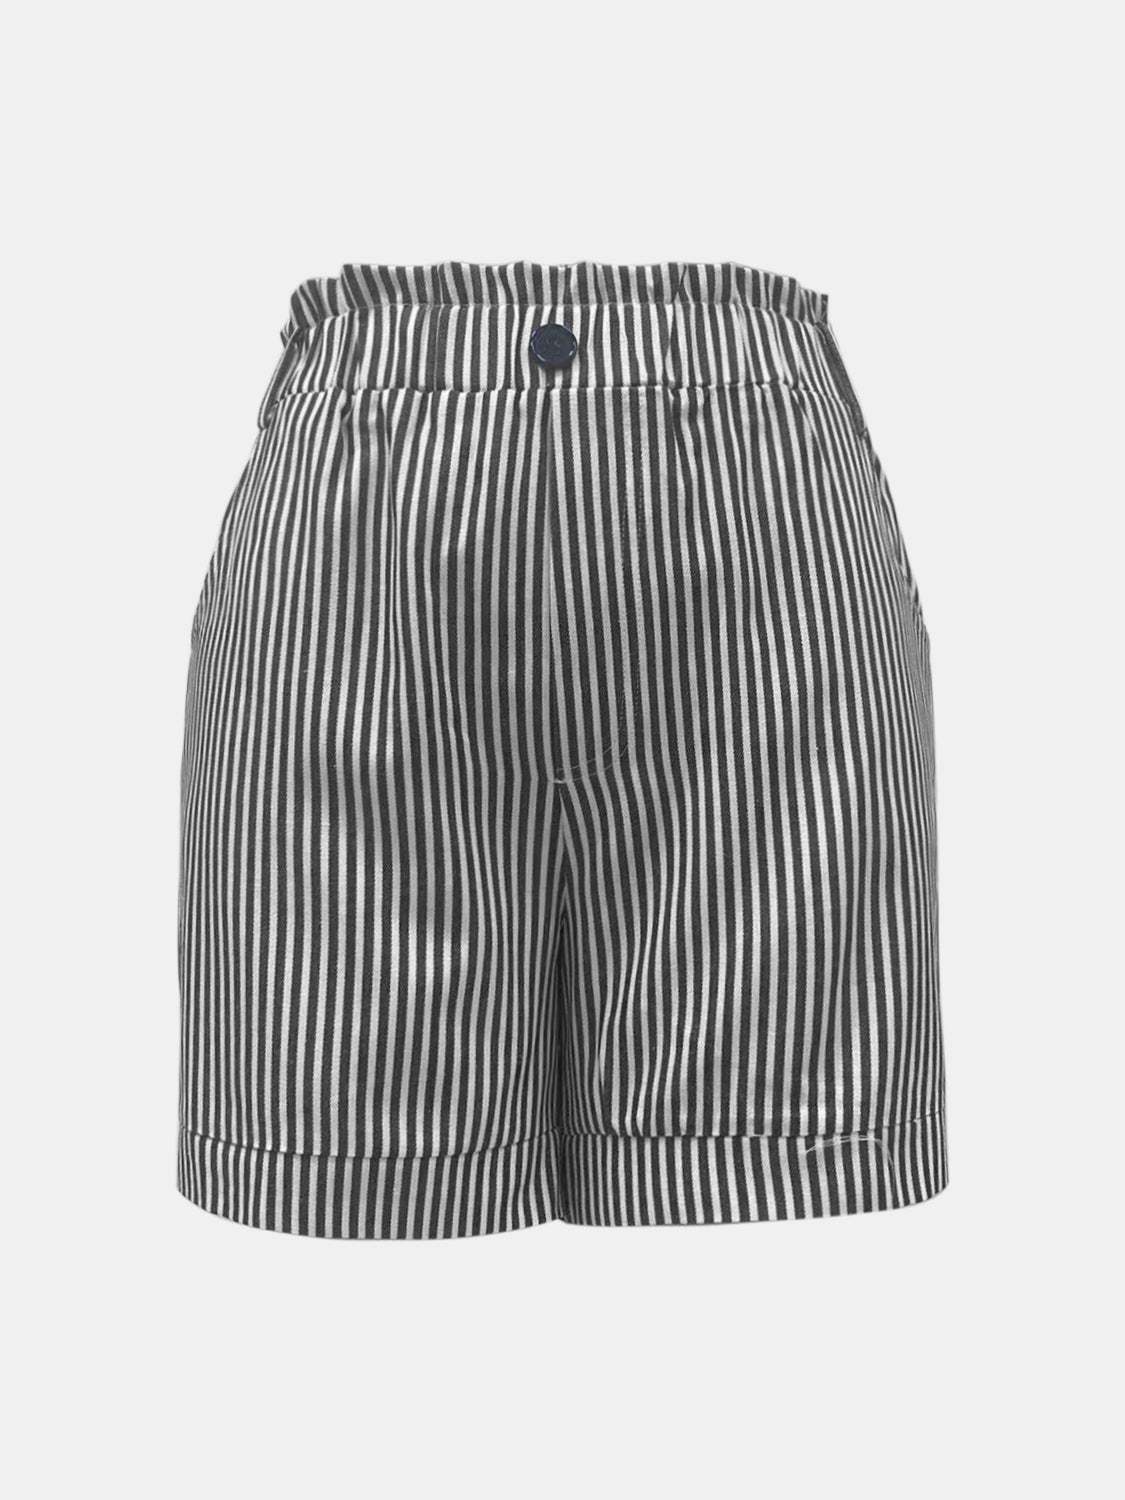 Full Size High Waist Vertical Striped Shorts